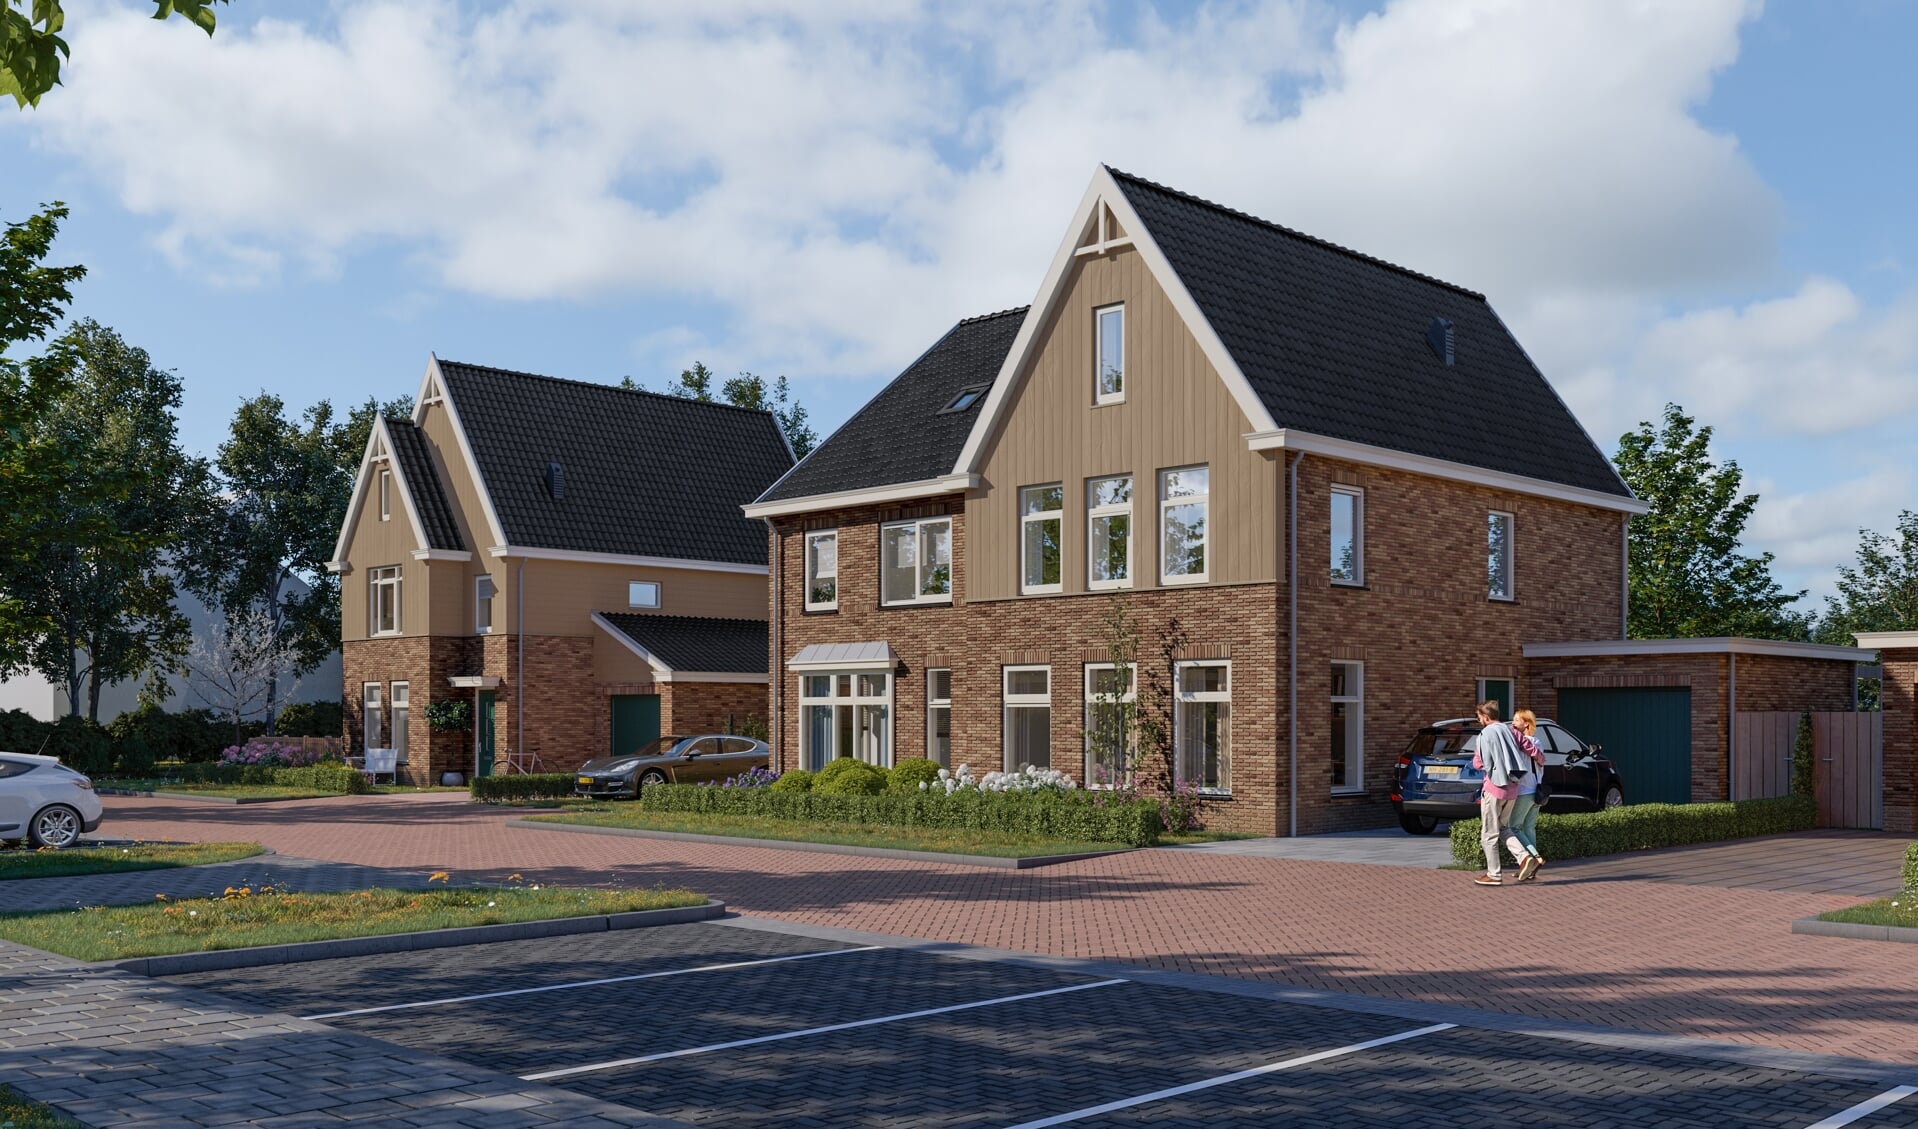 Start verkoop 19 woningen fase 1C in ’t Zand-Noord.